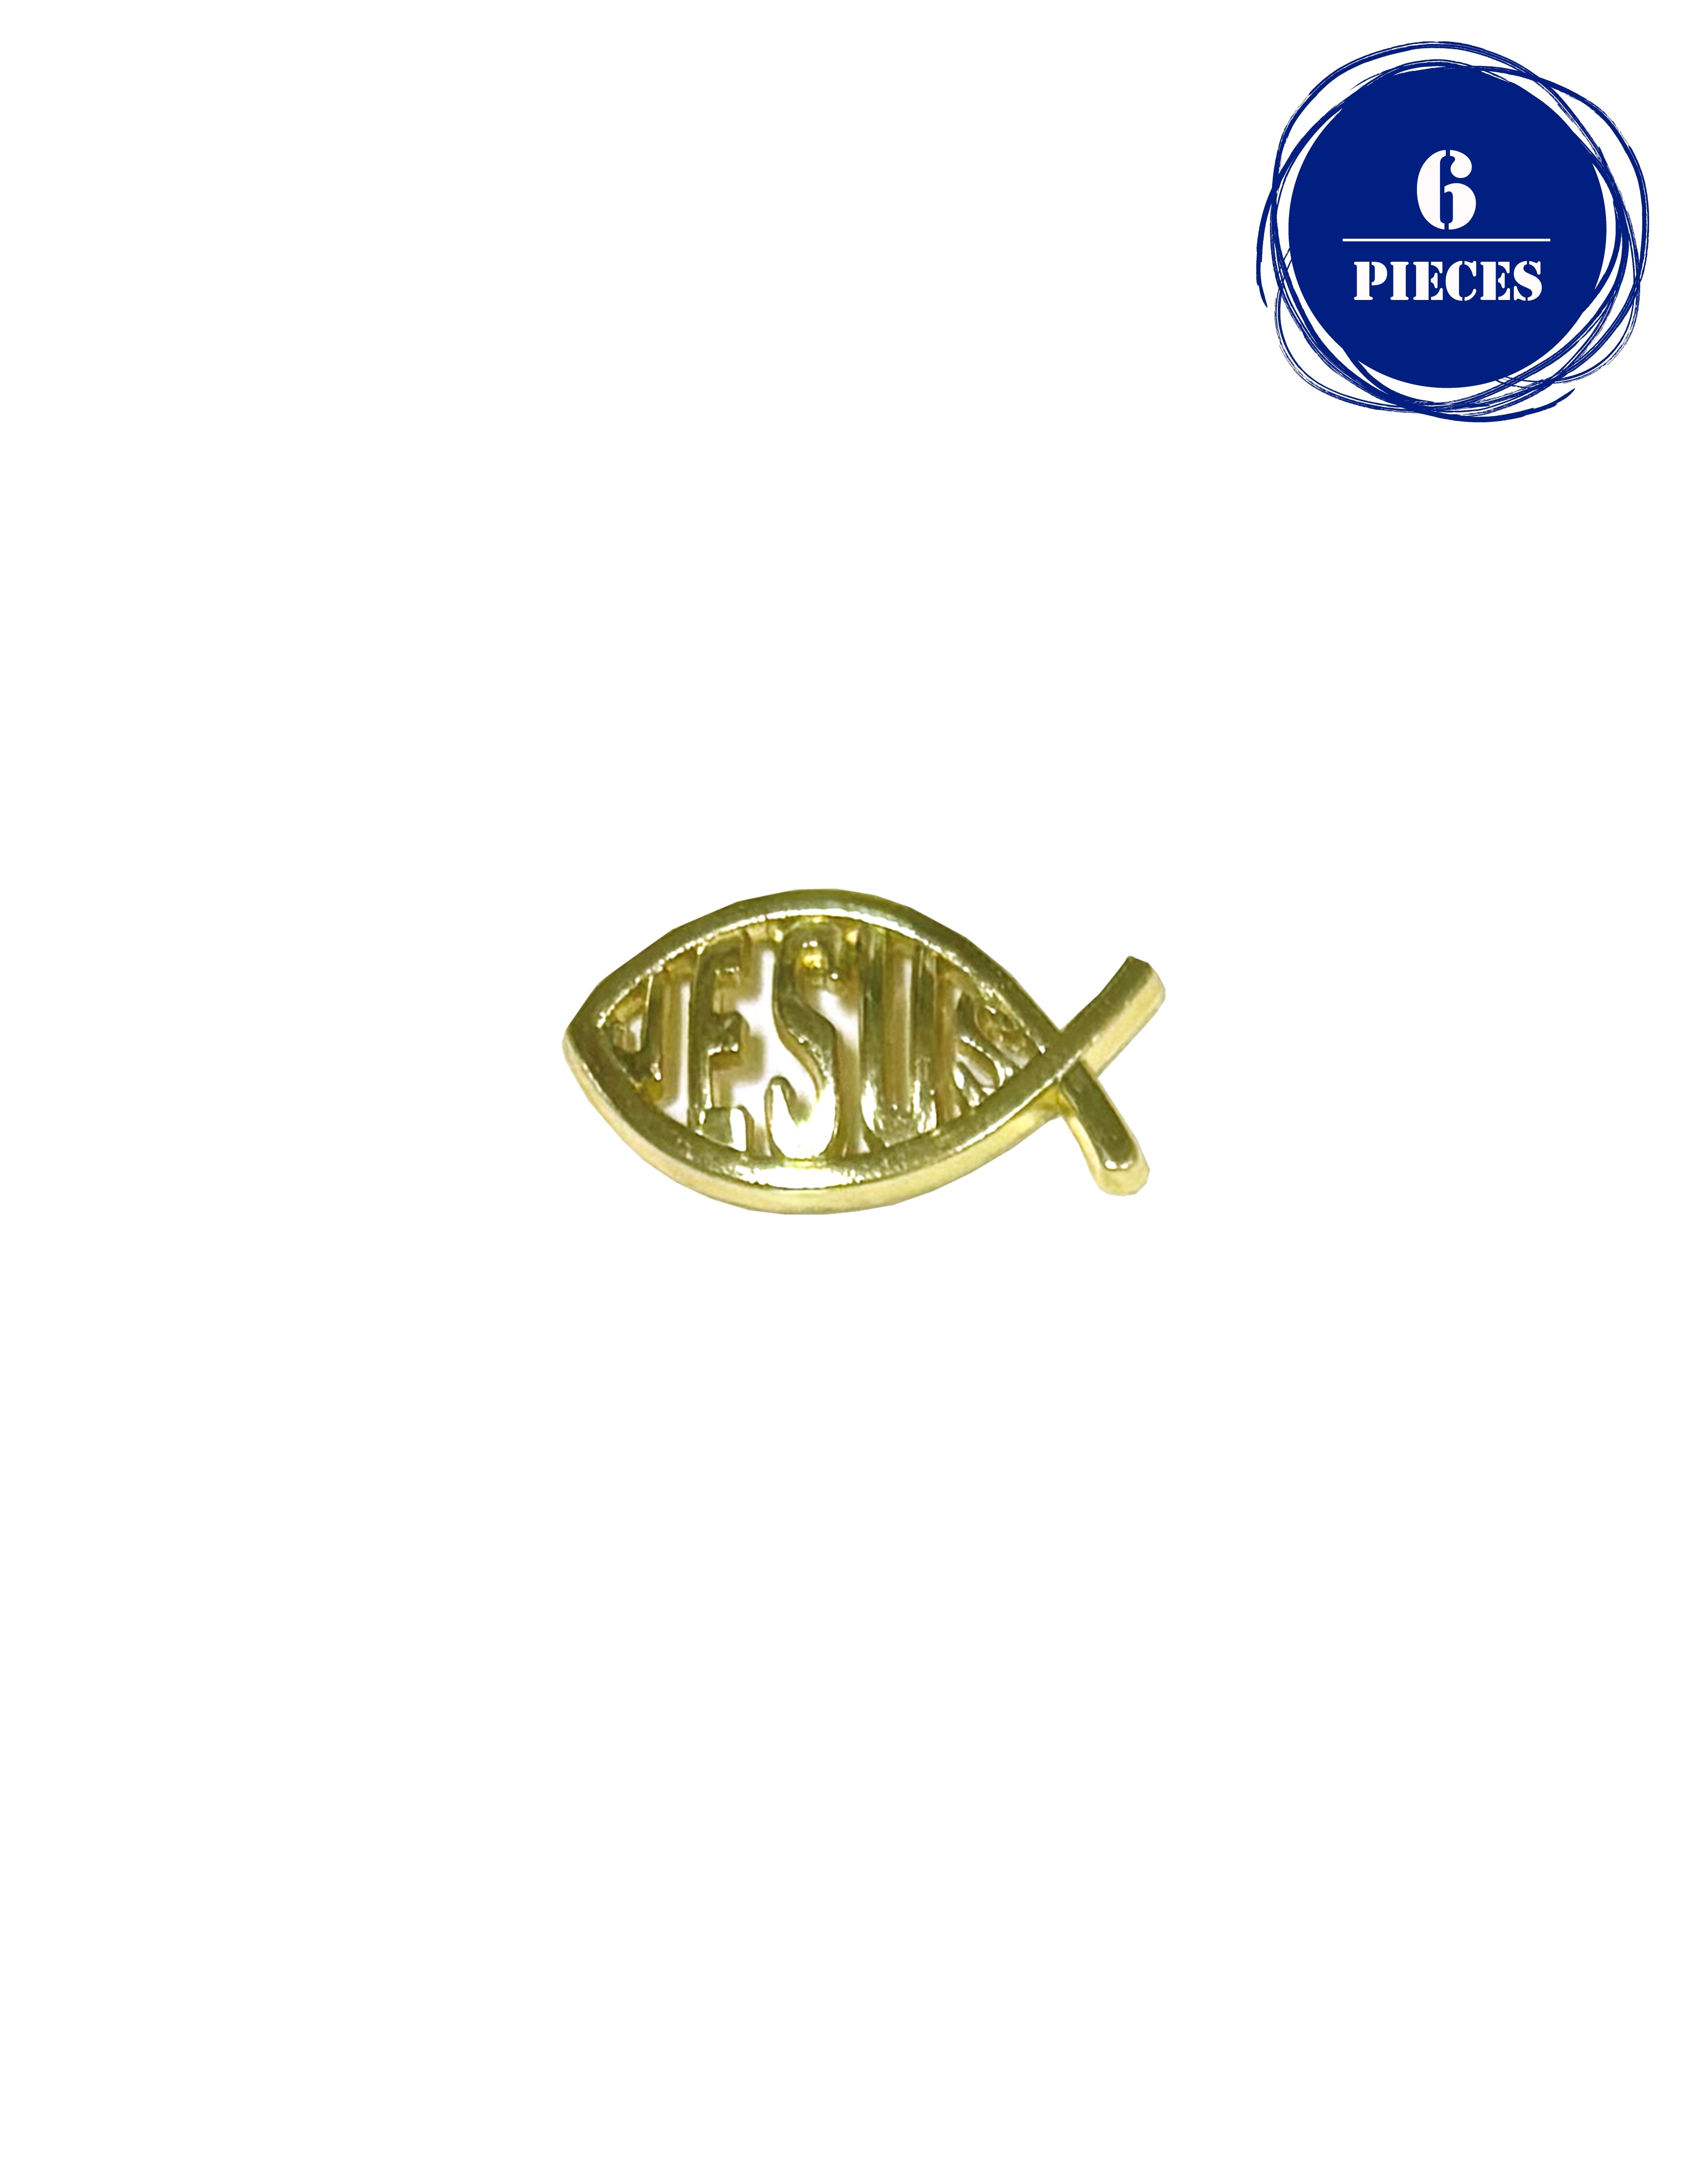 Gold Jesus fish lapel pin